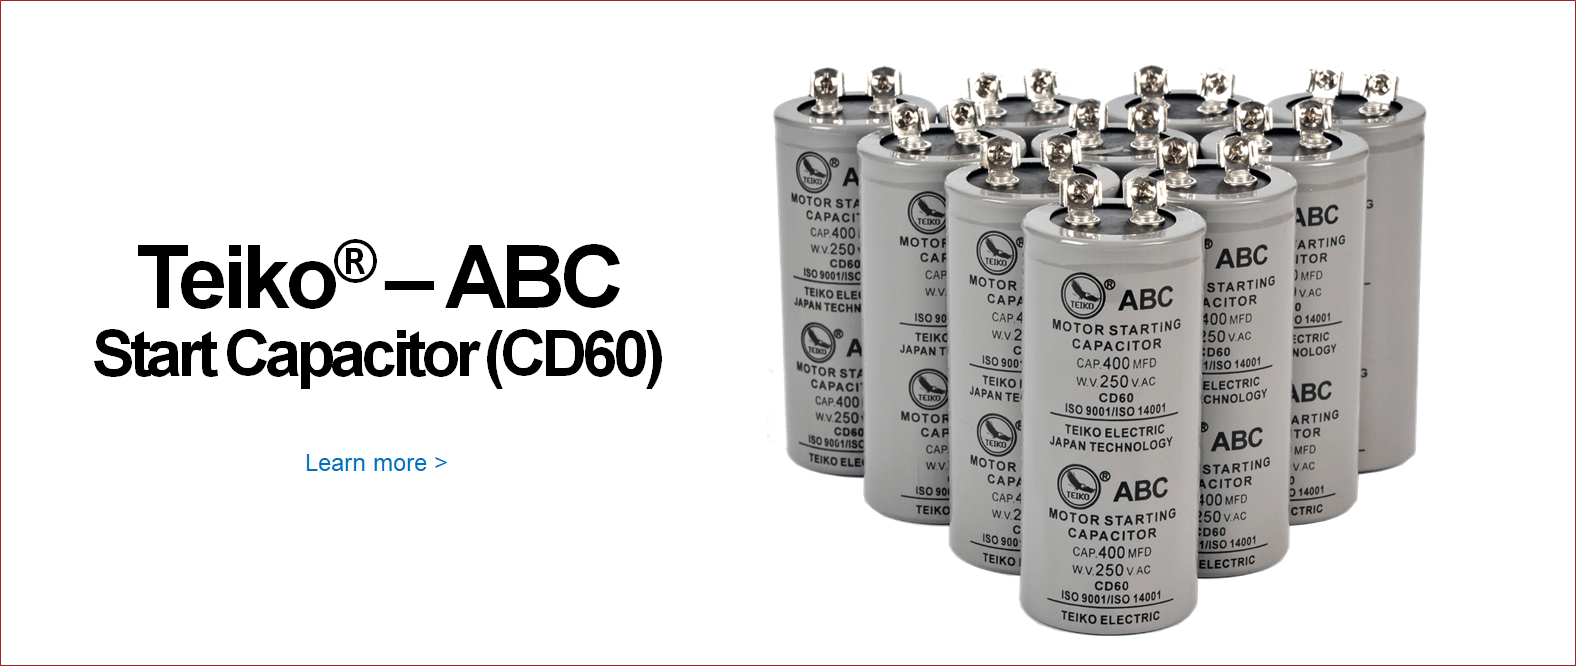 Start Capacitor (CD60) Teiko® - ABC